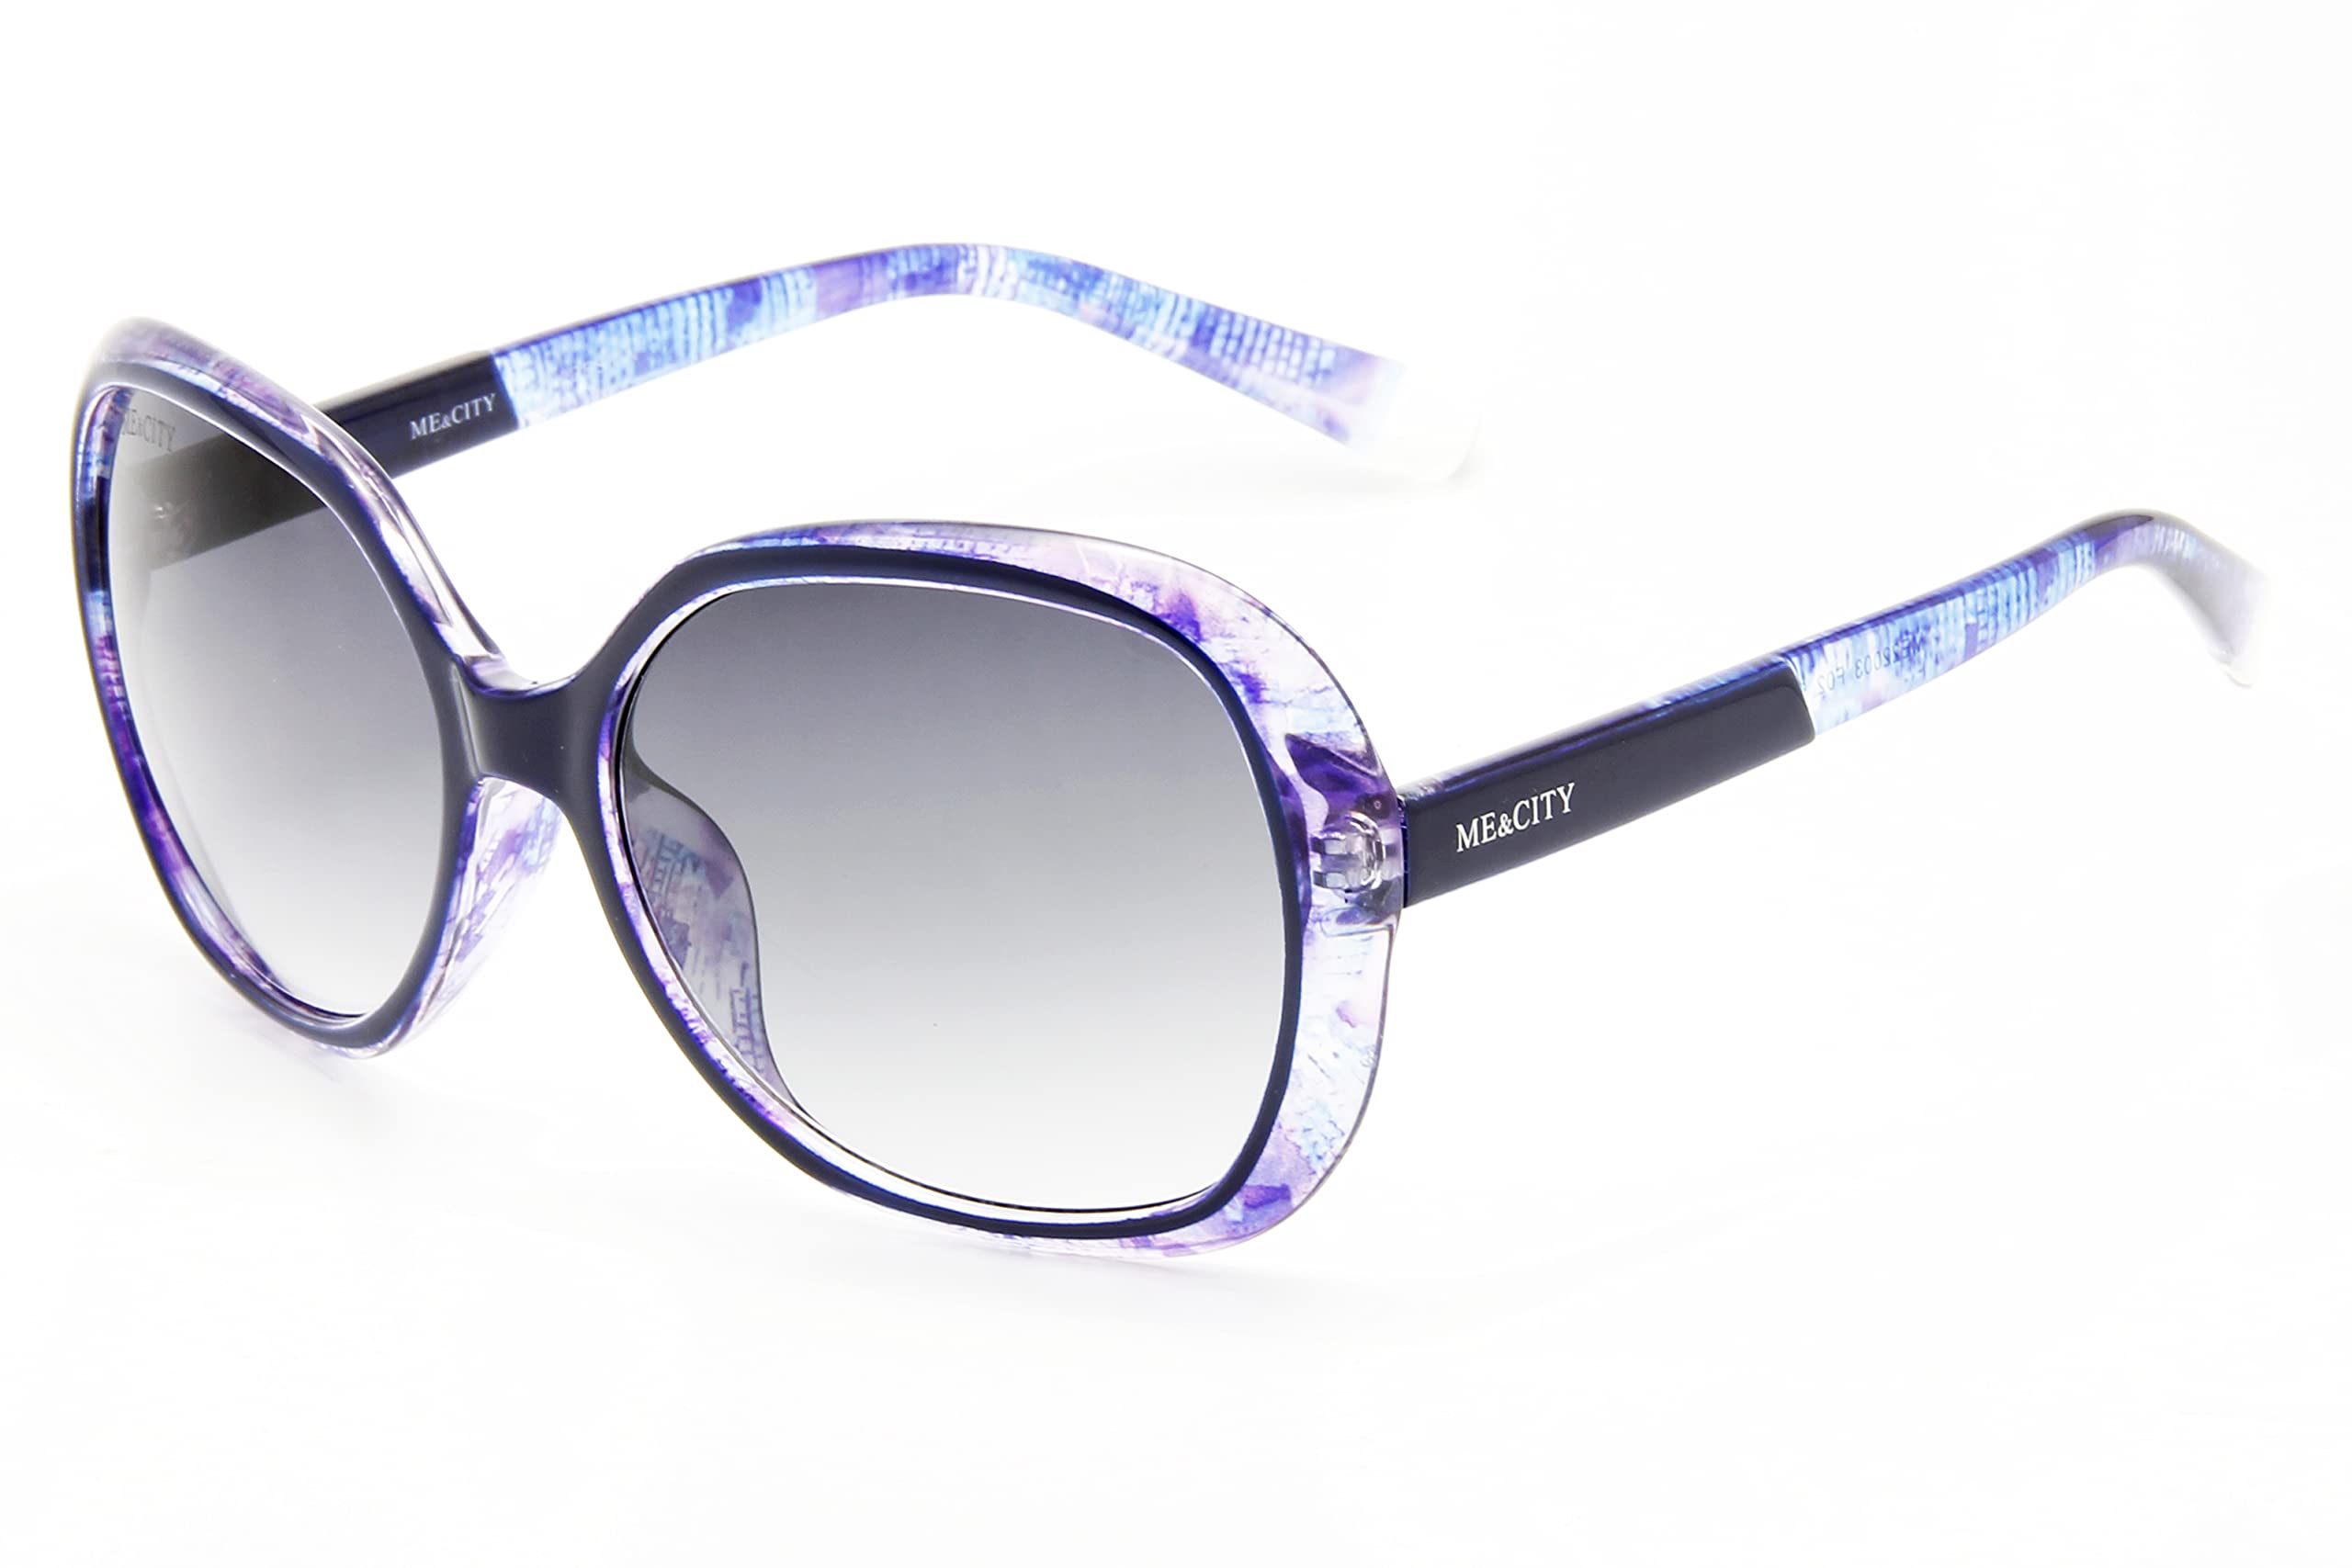 RUSHOWSHO Women Fashion Sunglasses UV Protection Outdoor Eyewear